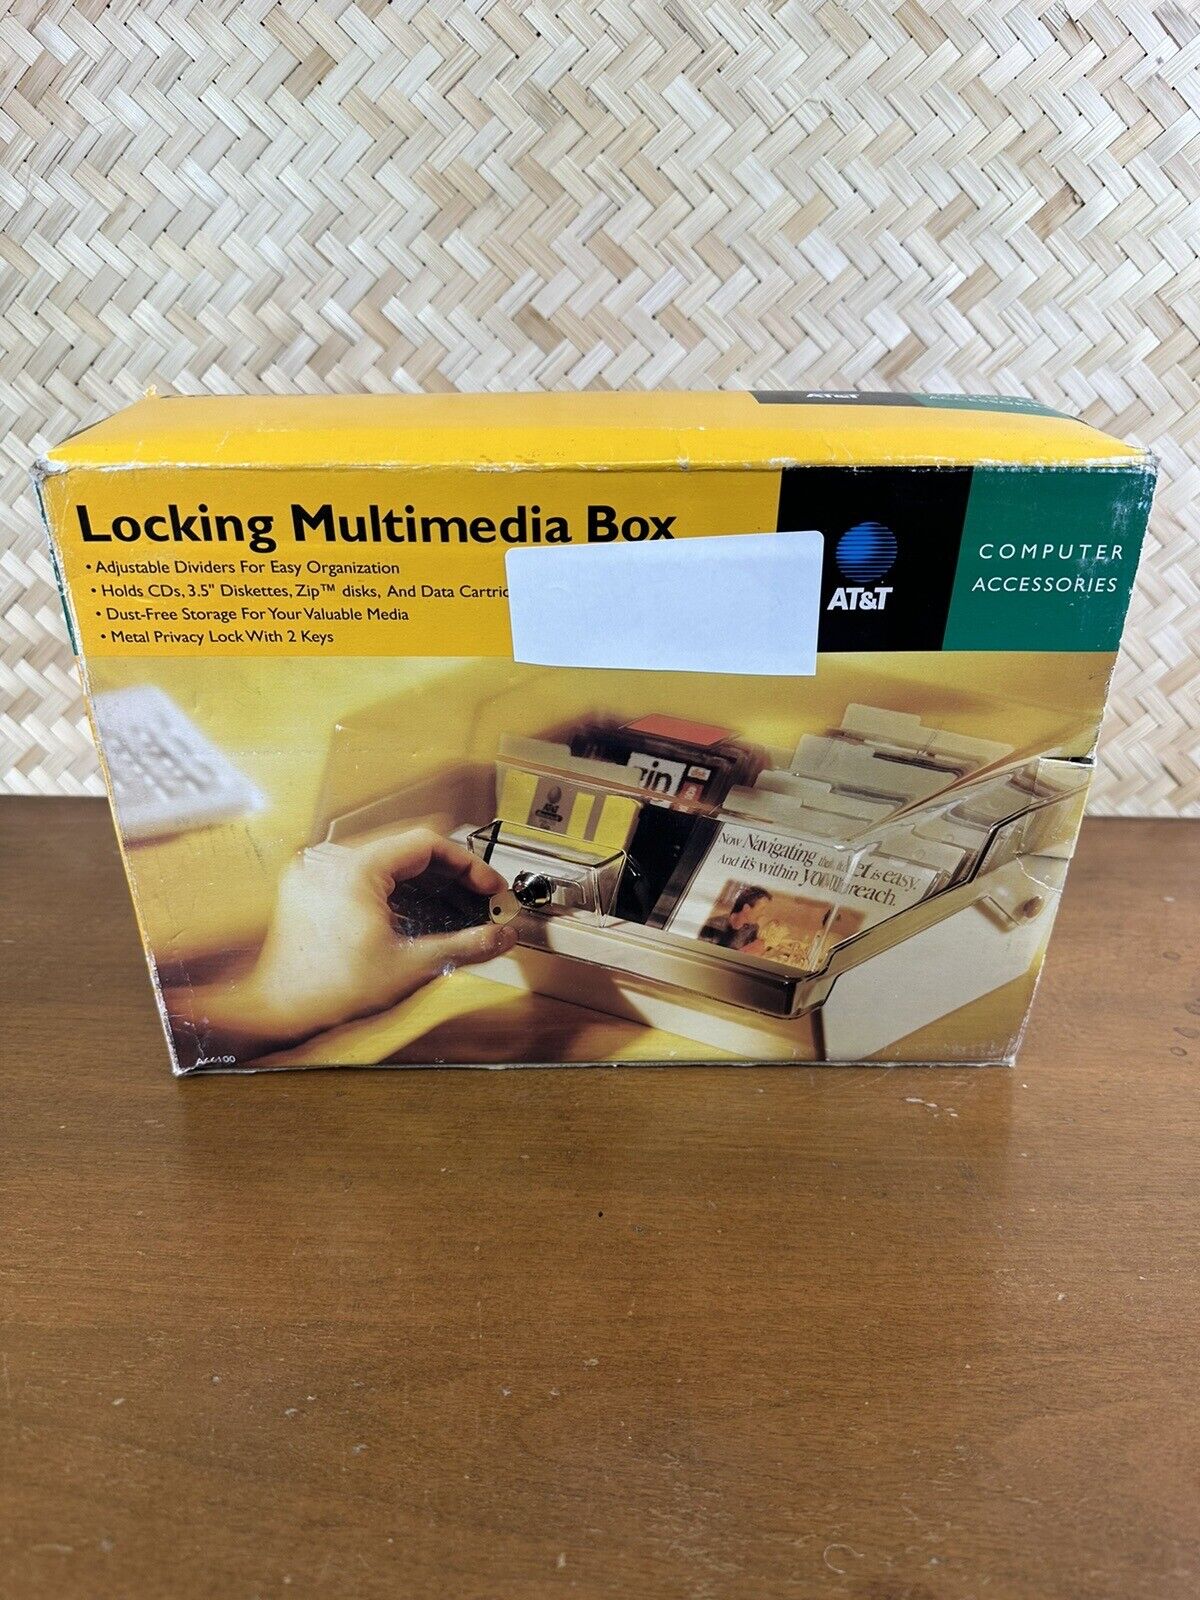 Locking Multimedia Box AT&T Computer Accessories No Key 1998 Vintage